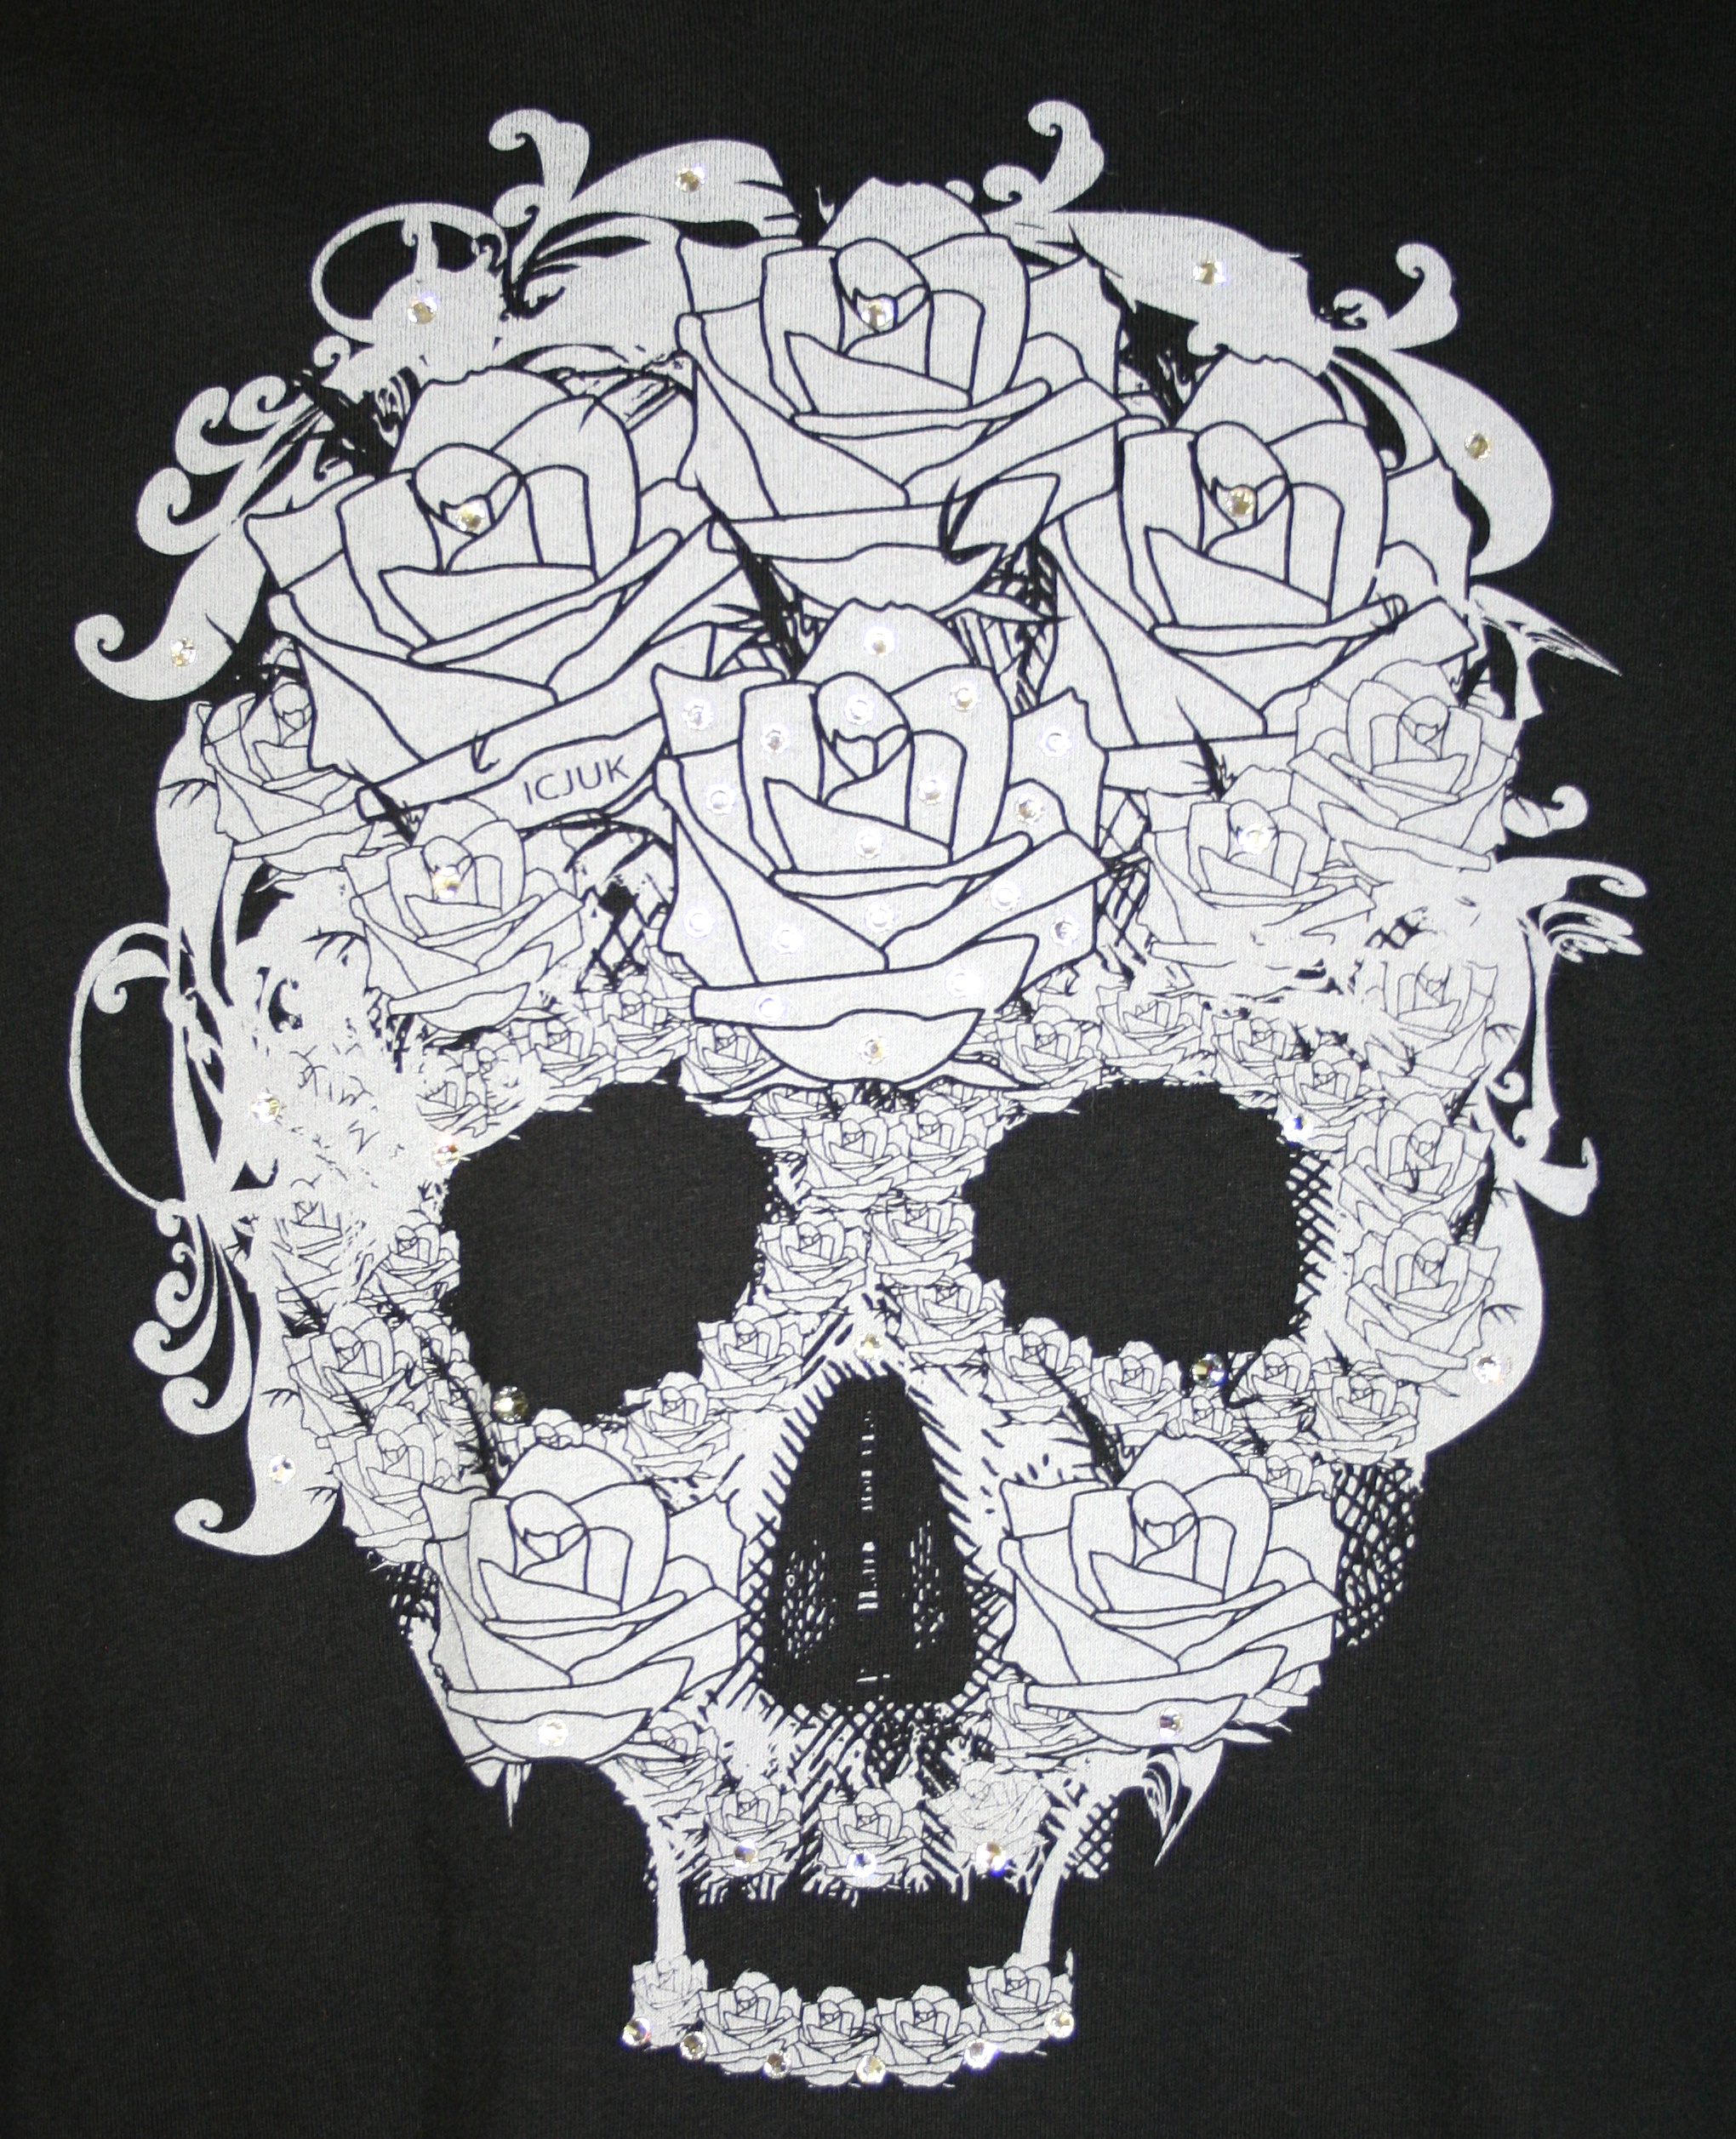 ICJUK's Skull and Roses design